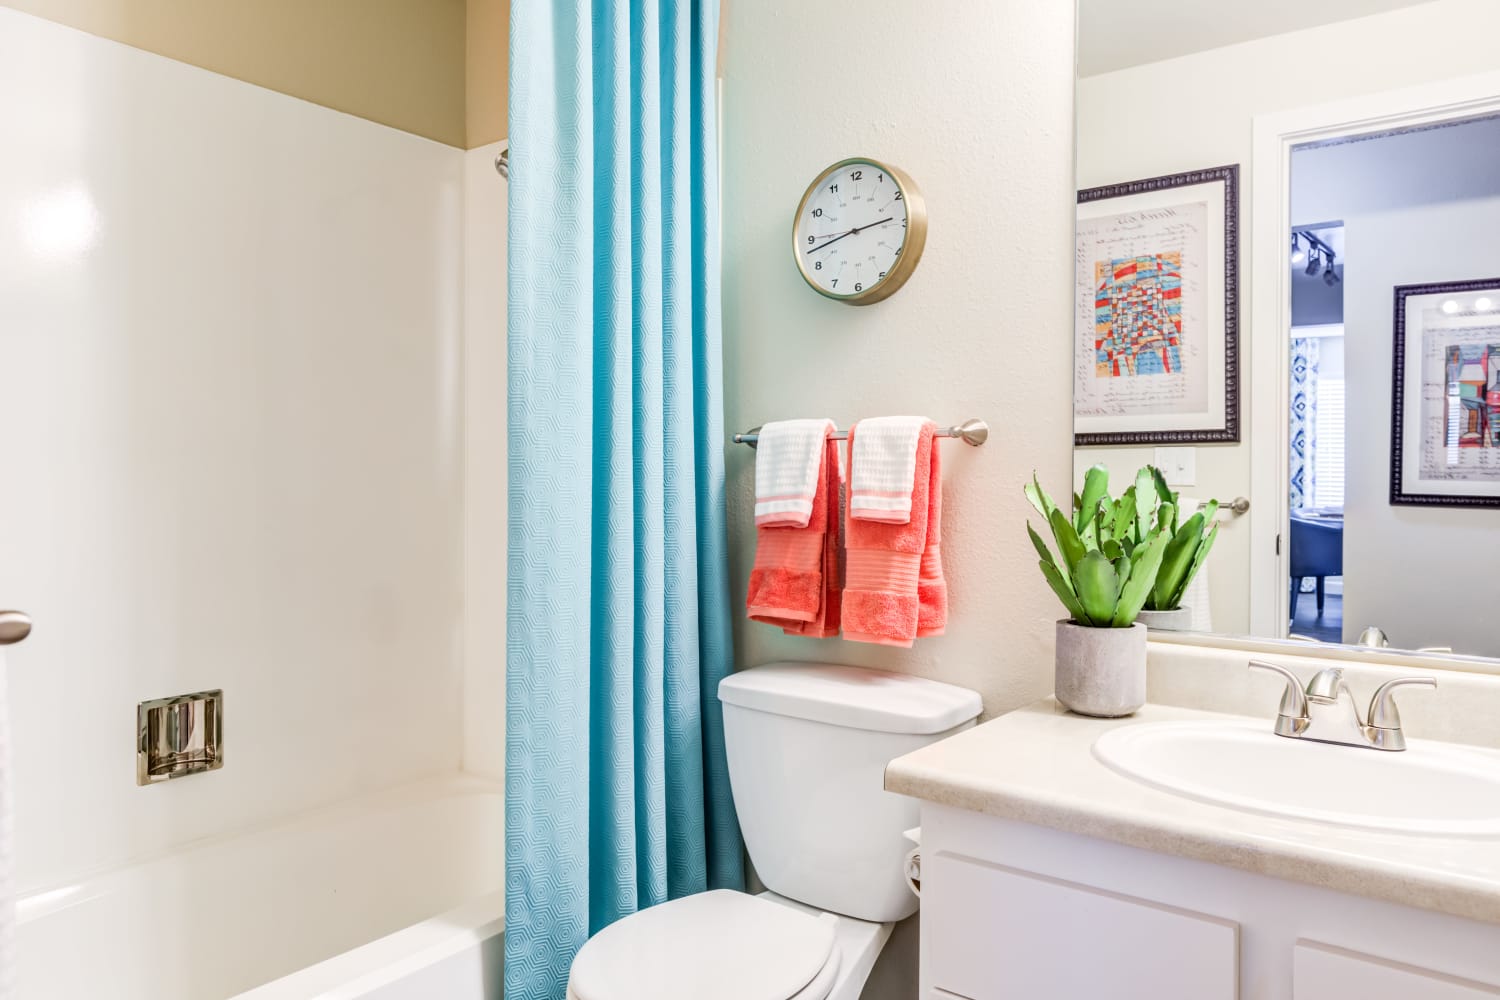 Bathroom featuring a shower bathtub at Edgewood Park Apartments in Bellevue, Washington